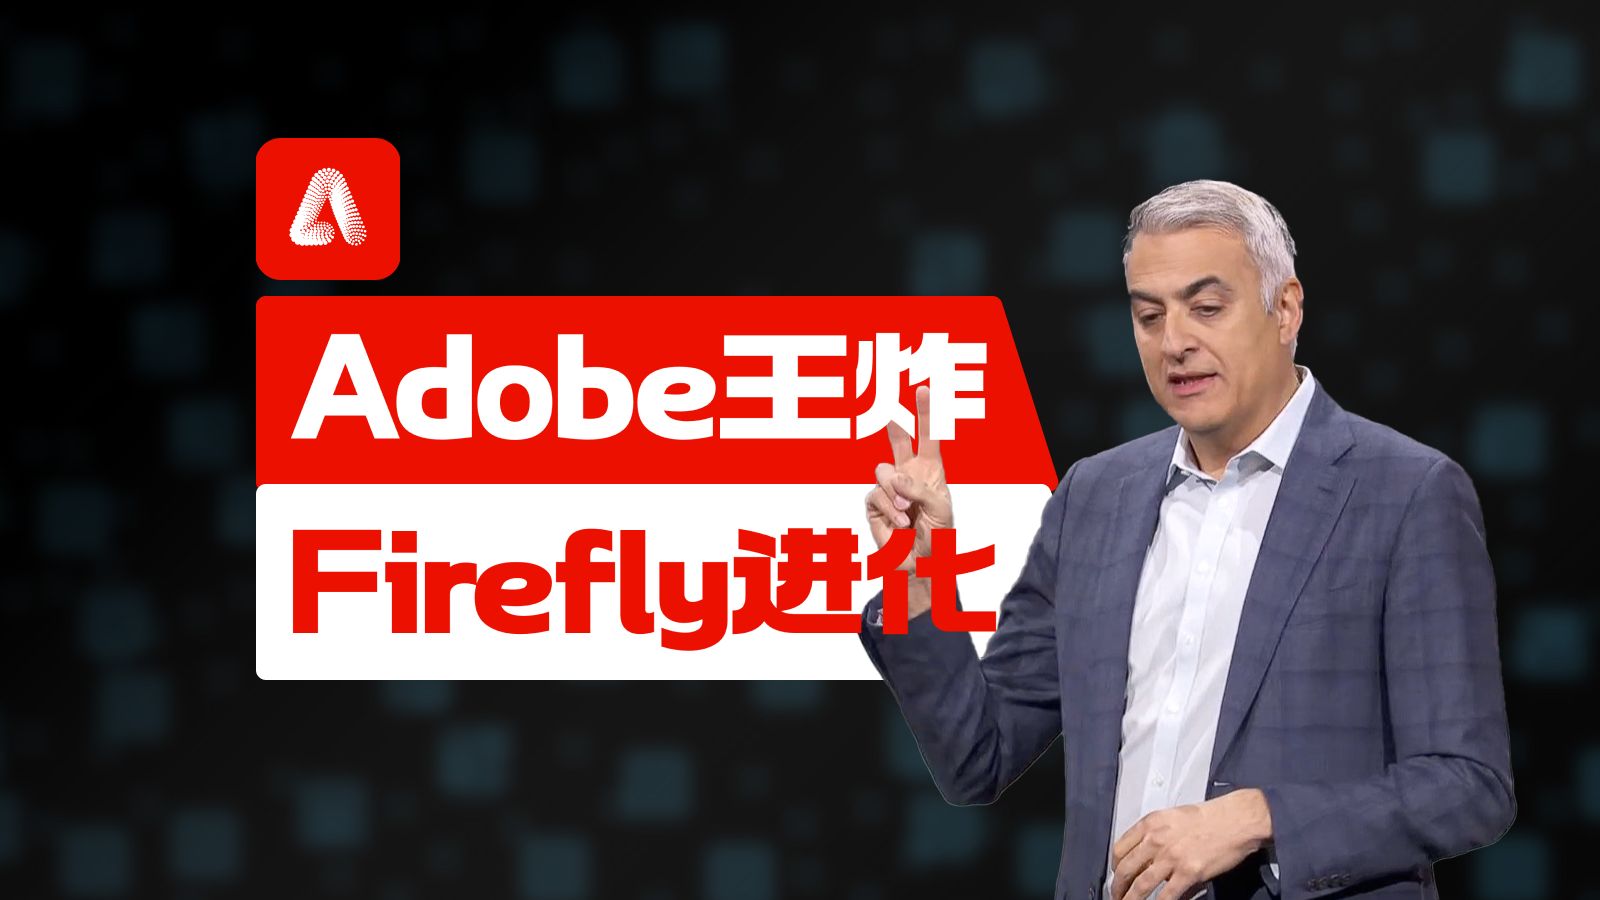 Firefly炸裂升级，流水线式全自动出图，Adobe要砸设计师饭碗